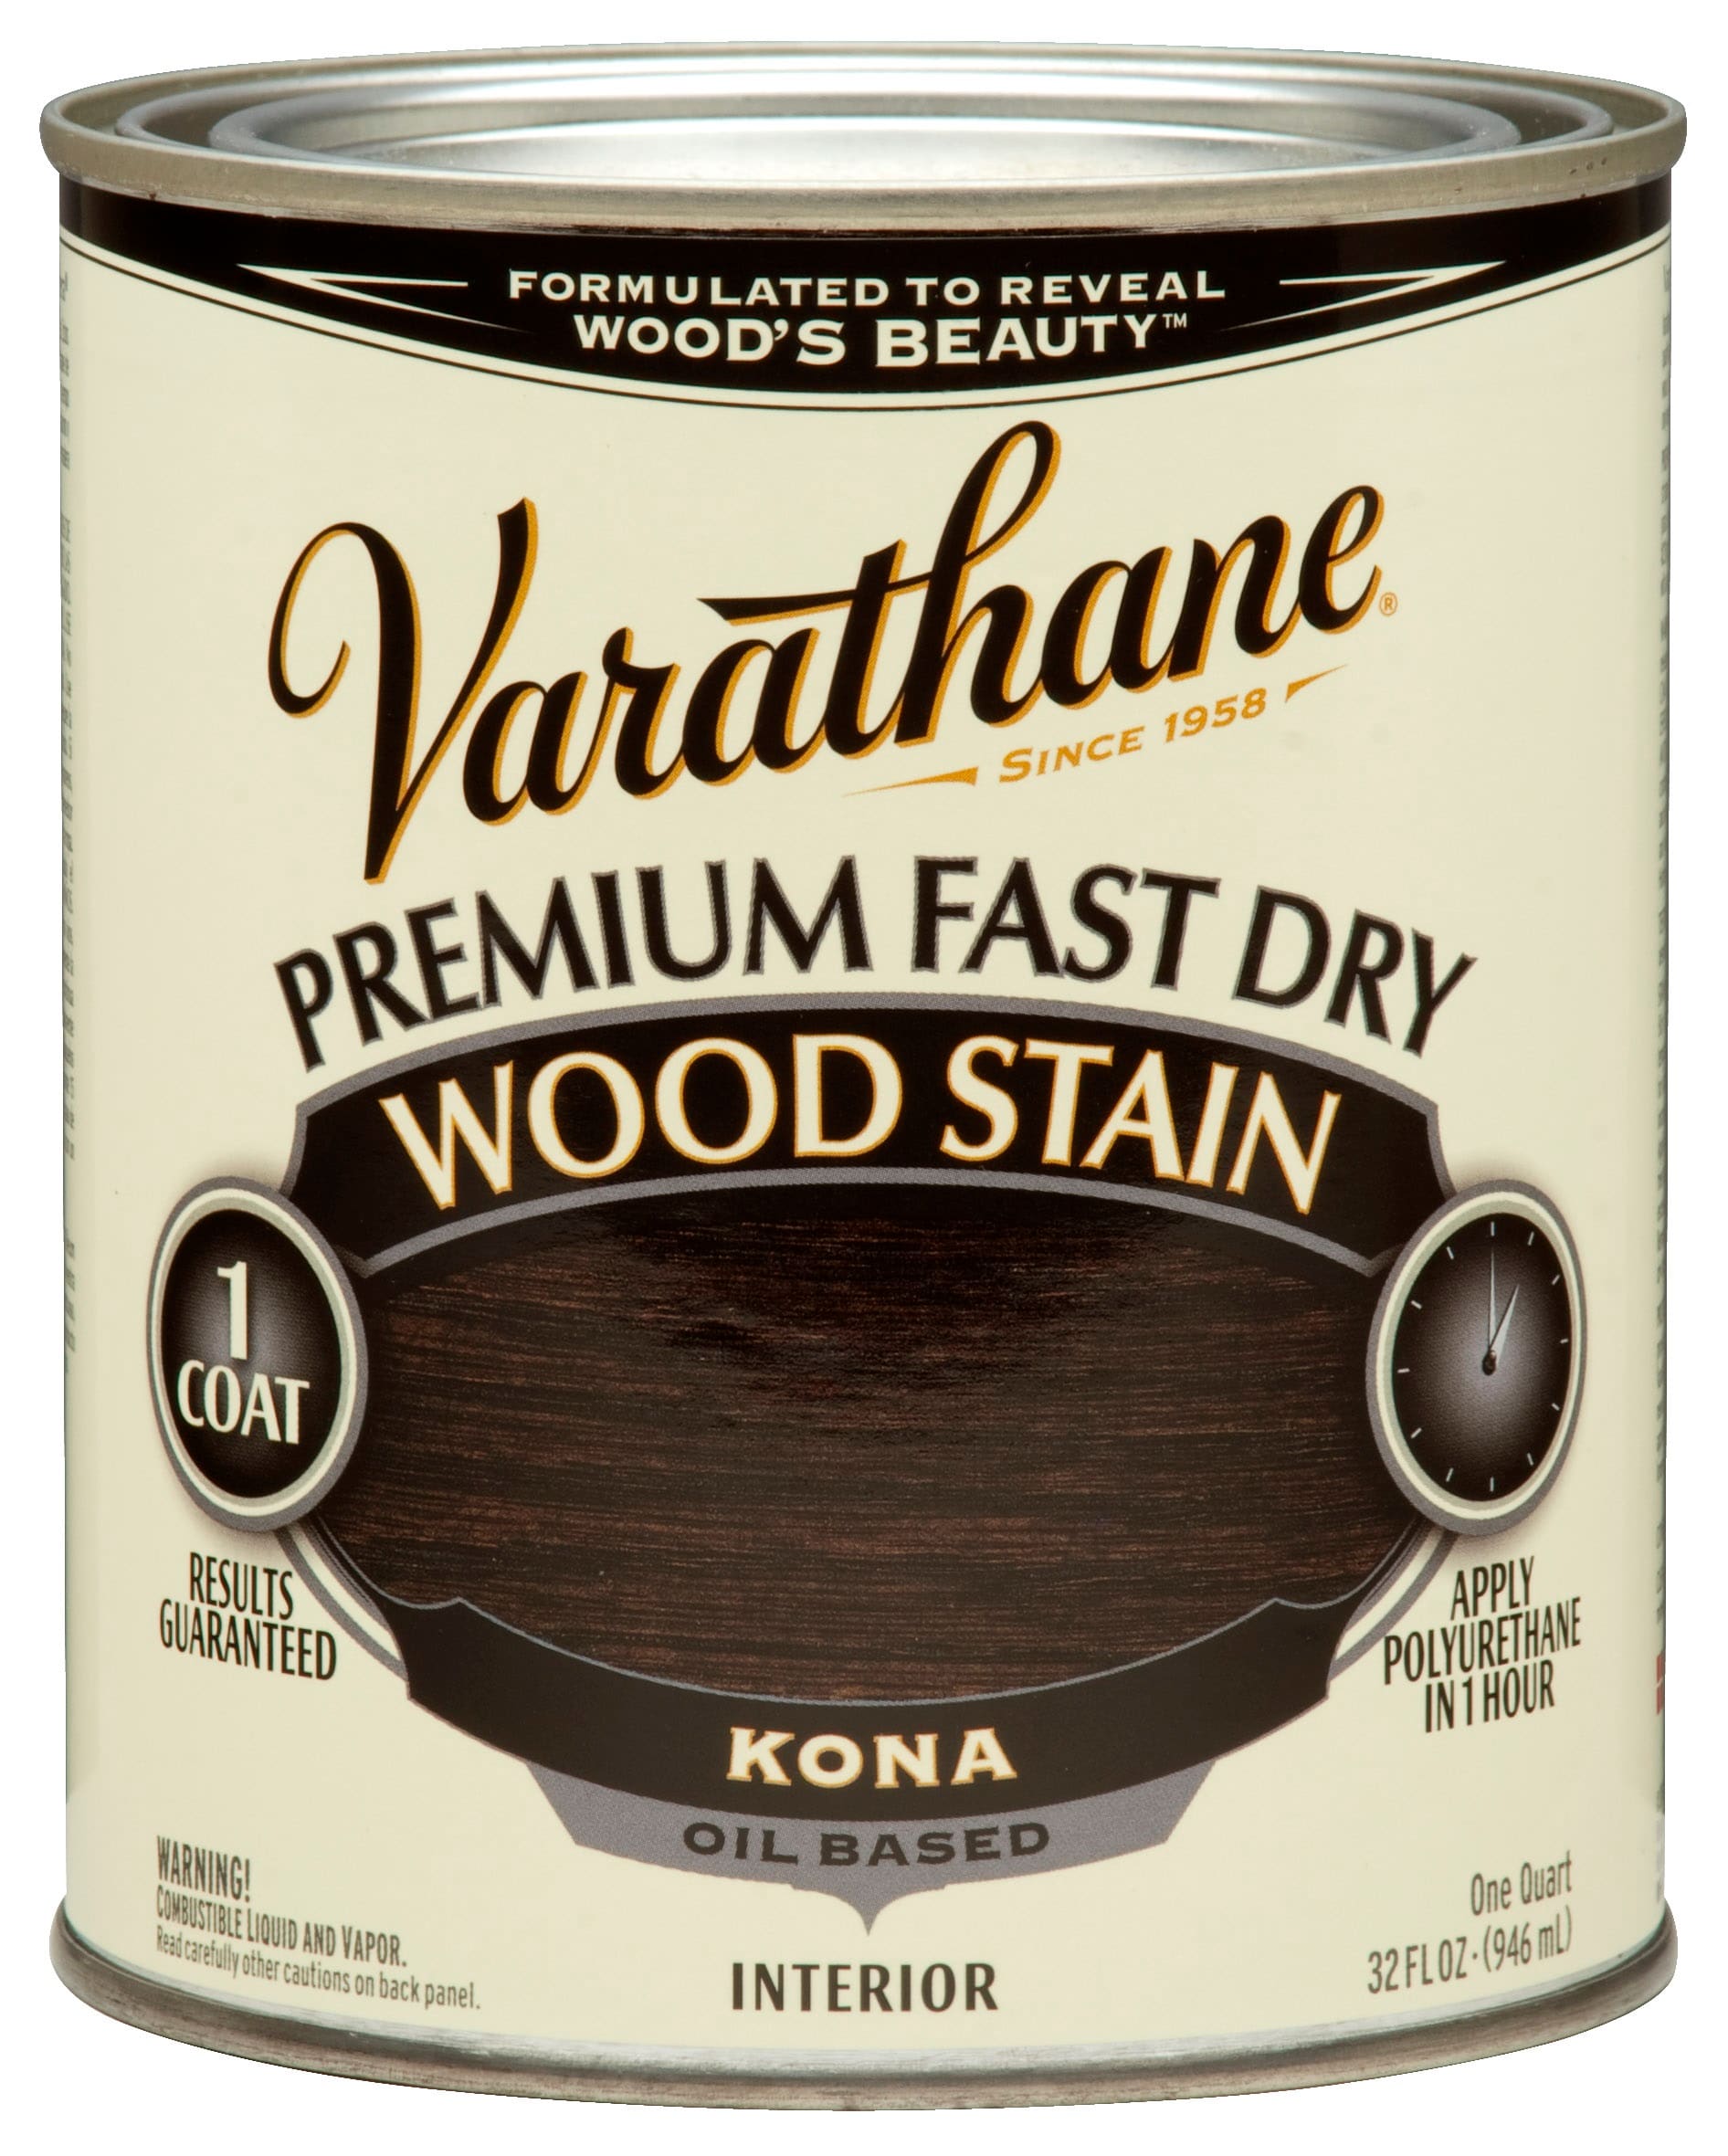 Varathane Premium Fast Dry Semi-Transparent Coral Wood Stain 1 Qt.